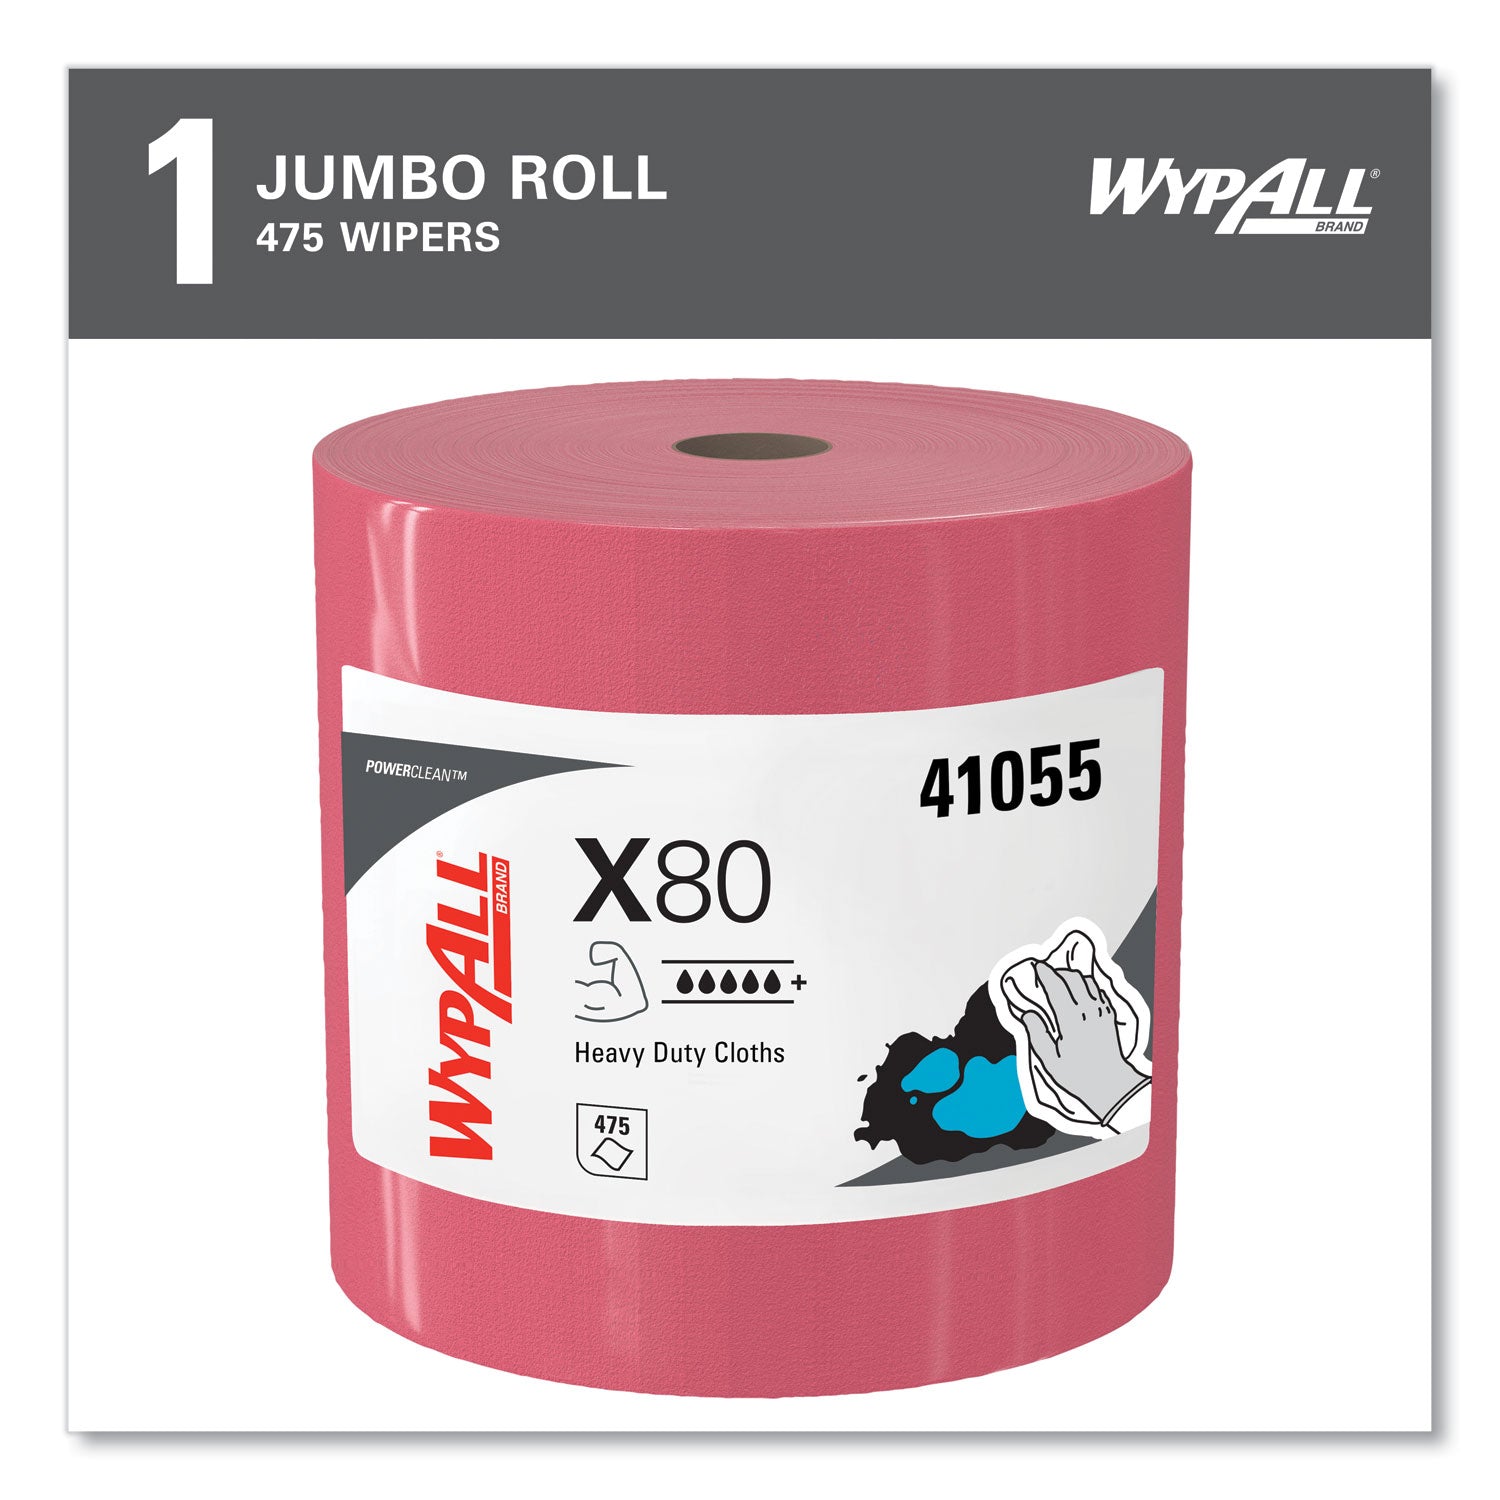 Power Clean X80 Heavy Duty Cloths, Jumbo Roll, 12.4 x 12.2, Red, 475 Wipers/Roll - 